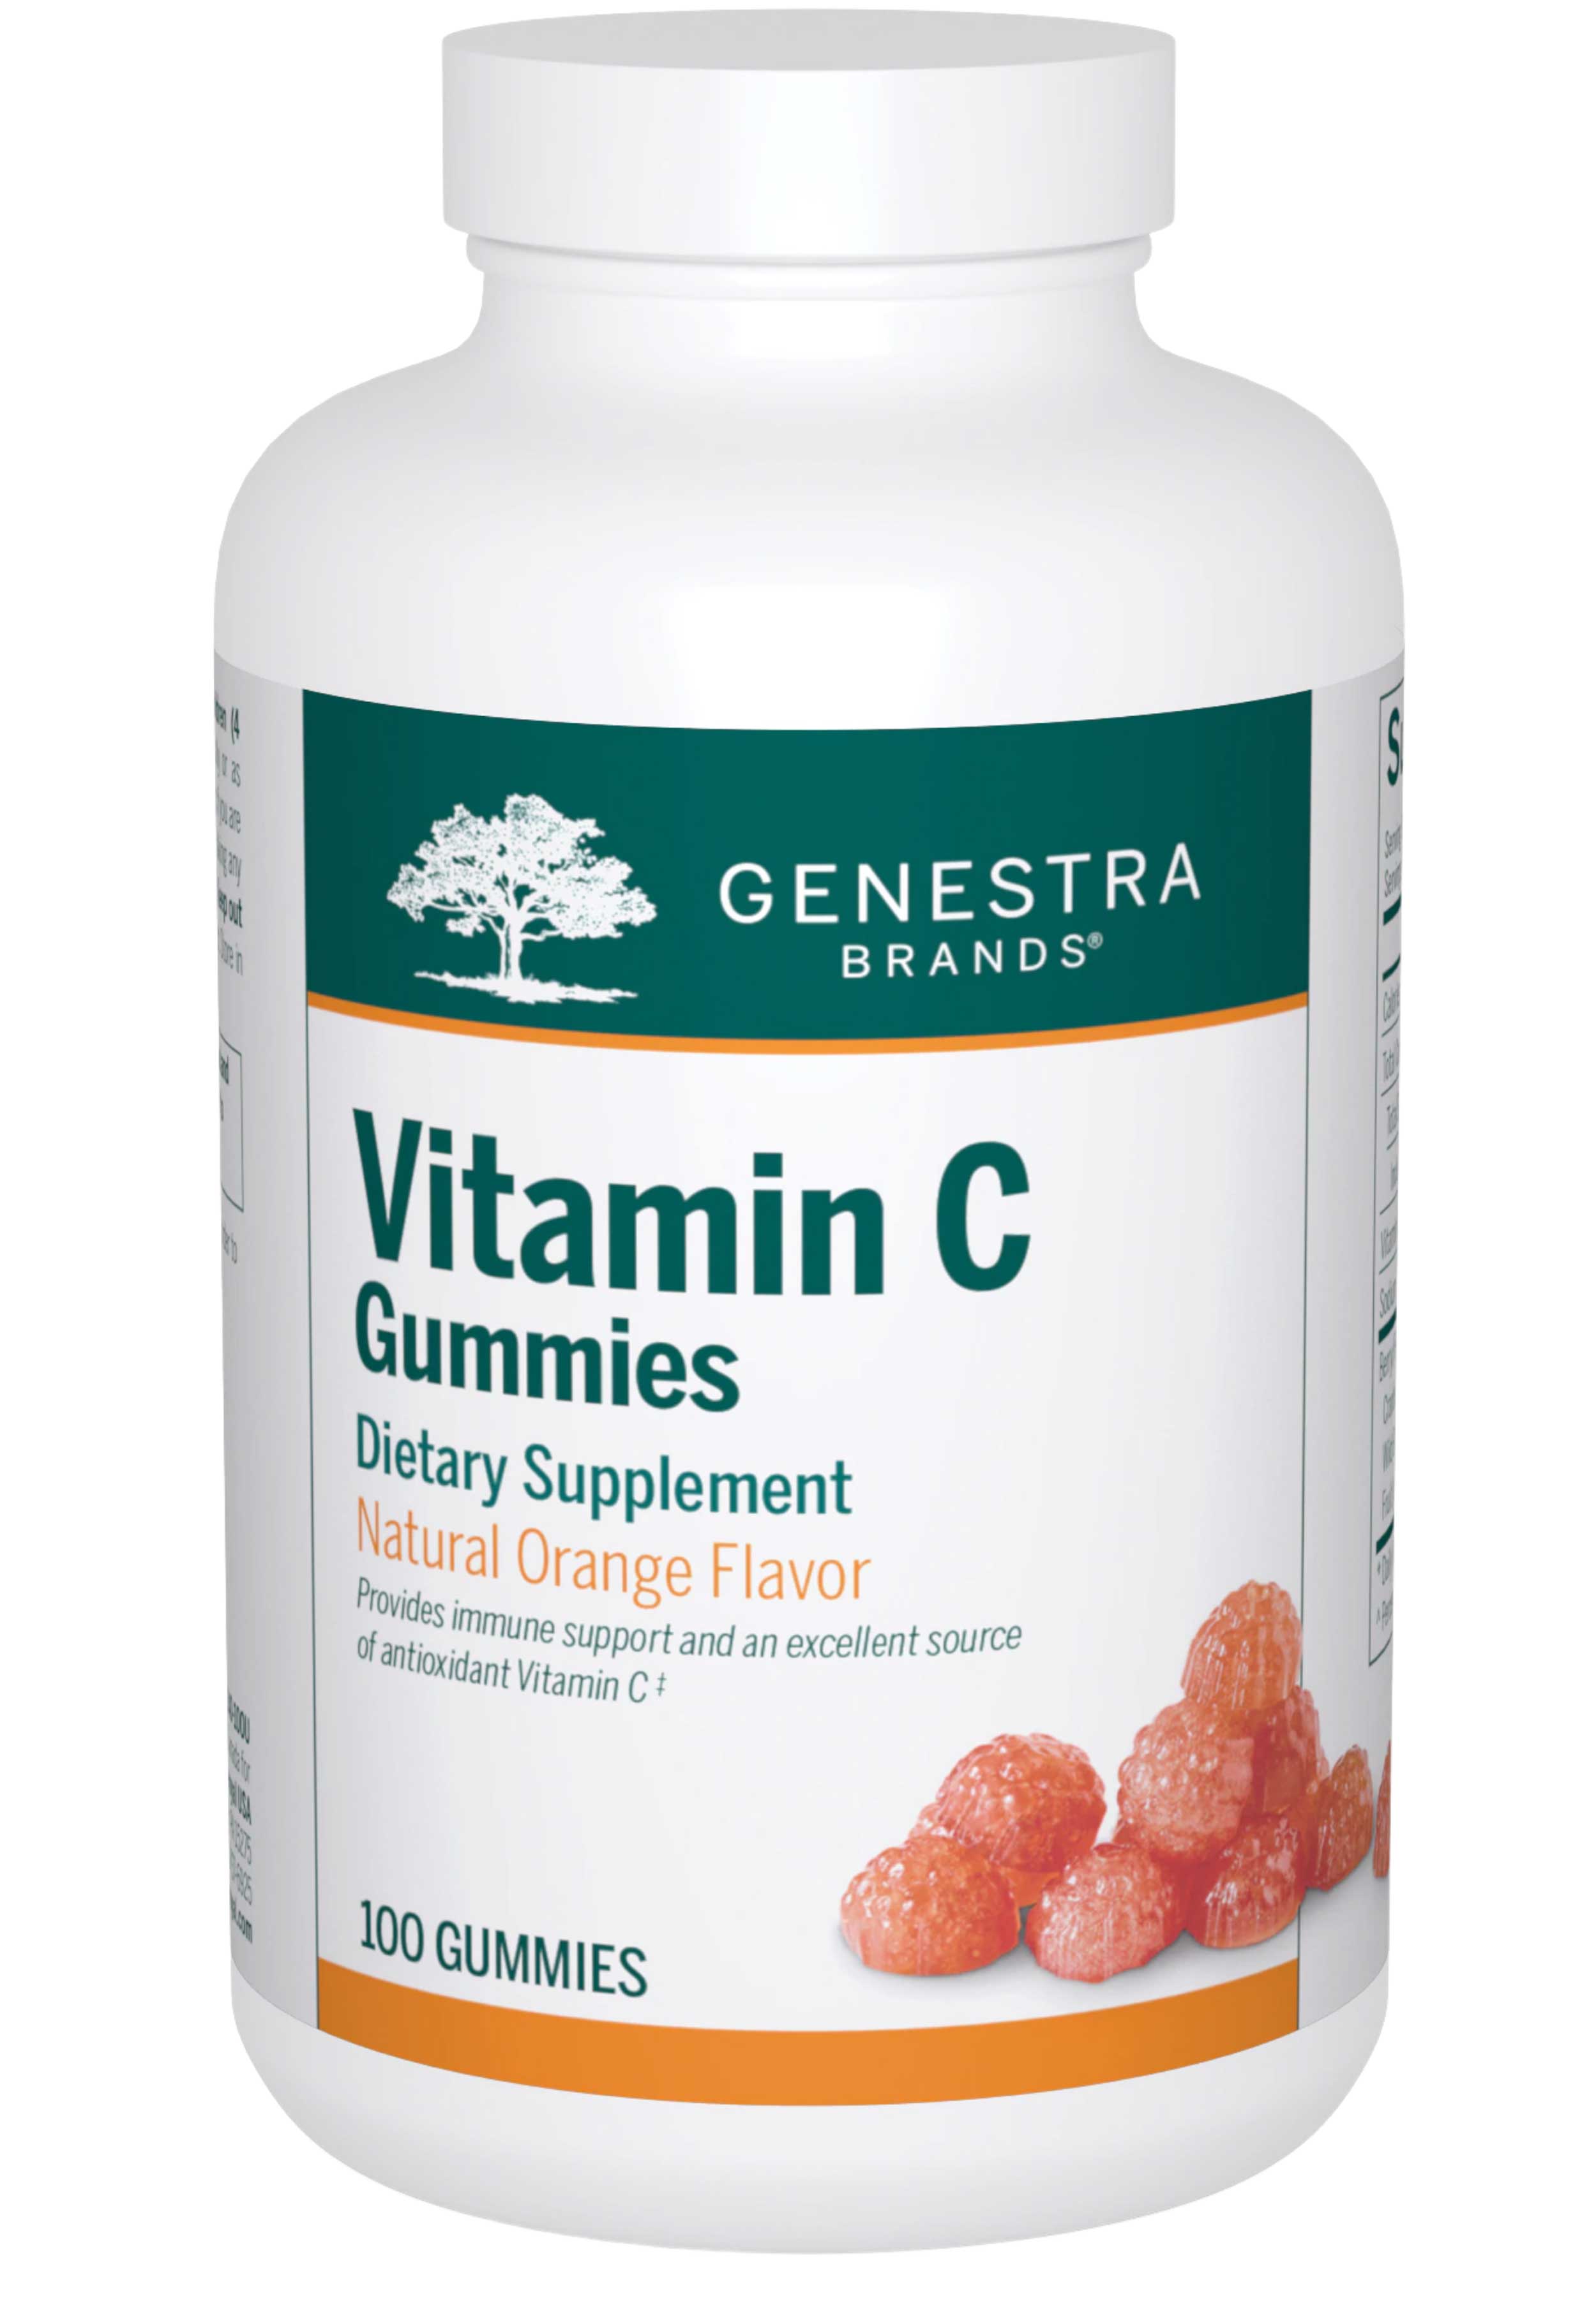 Genestra Brands Vitamin C Gummies